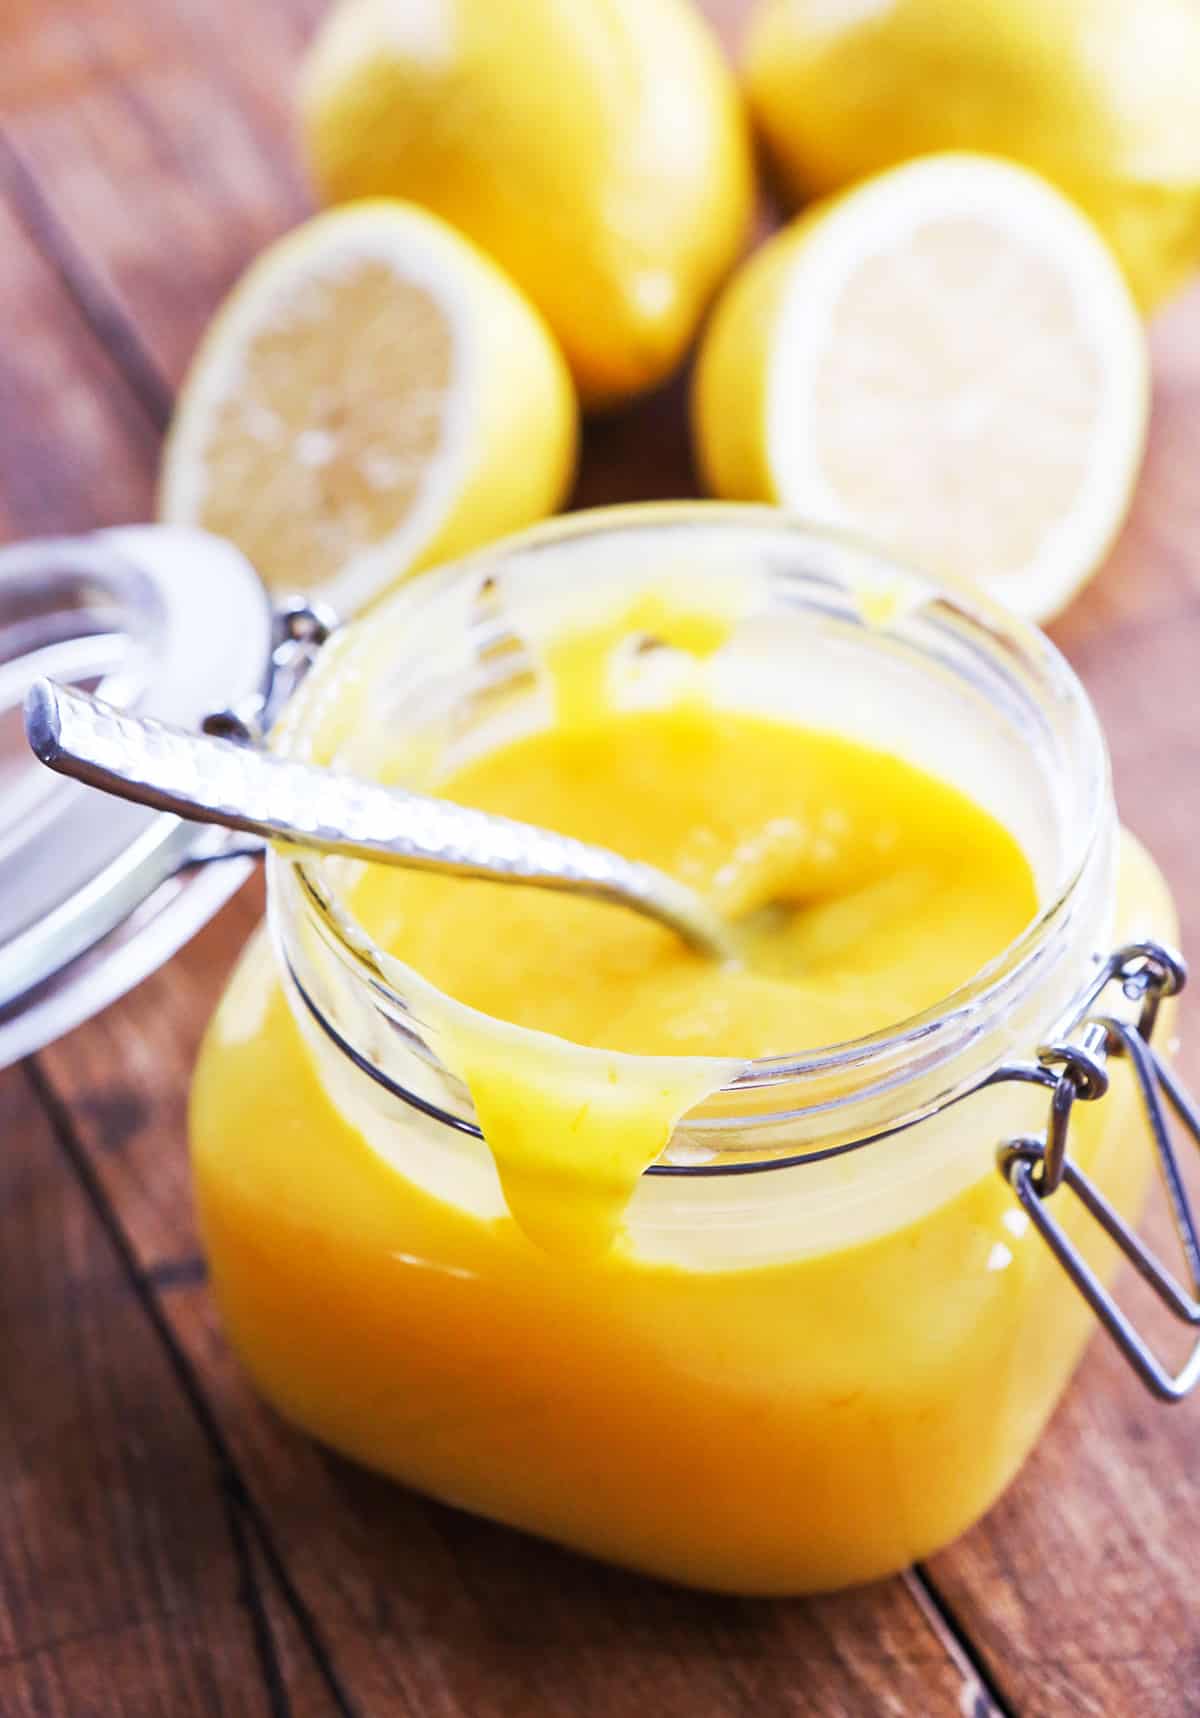 Jar of lemon curd surrounded by lemons.